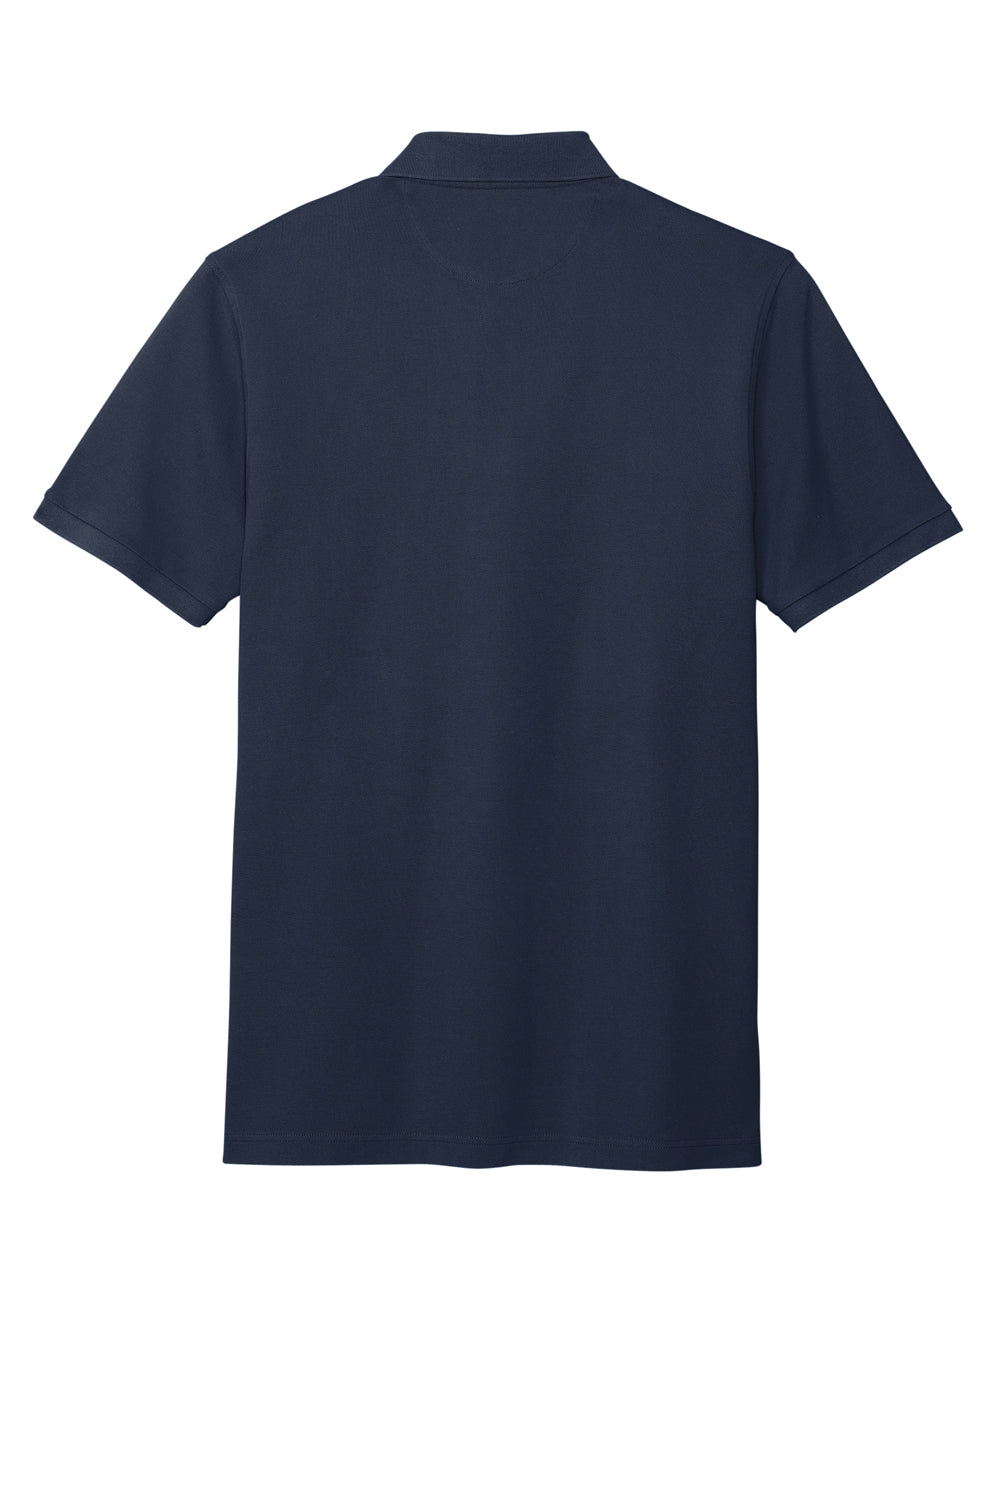 Brooks Brothers Mens Pique Short Sleeve Polo Shirt Navy Blue Flat Back